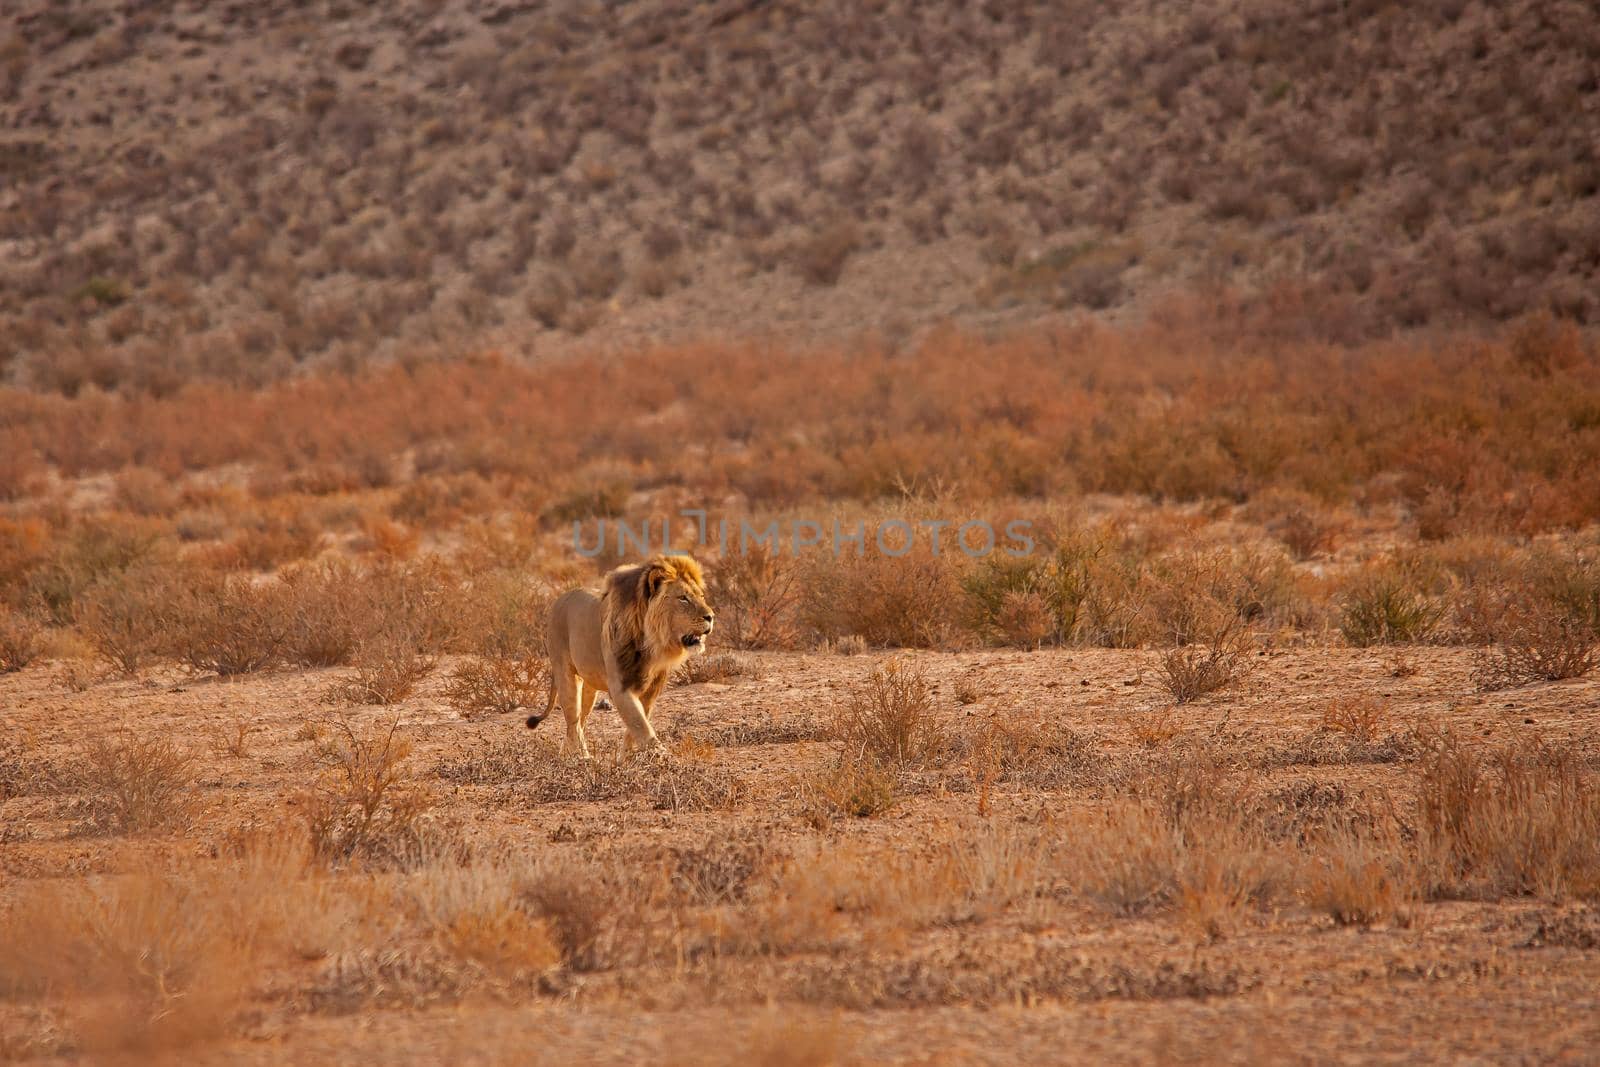 Kalahari Lion 5115 by kobus_peche